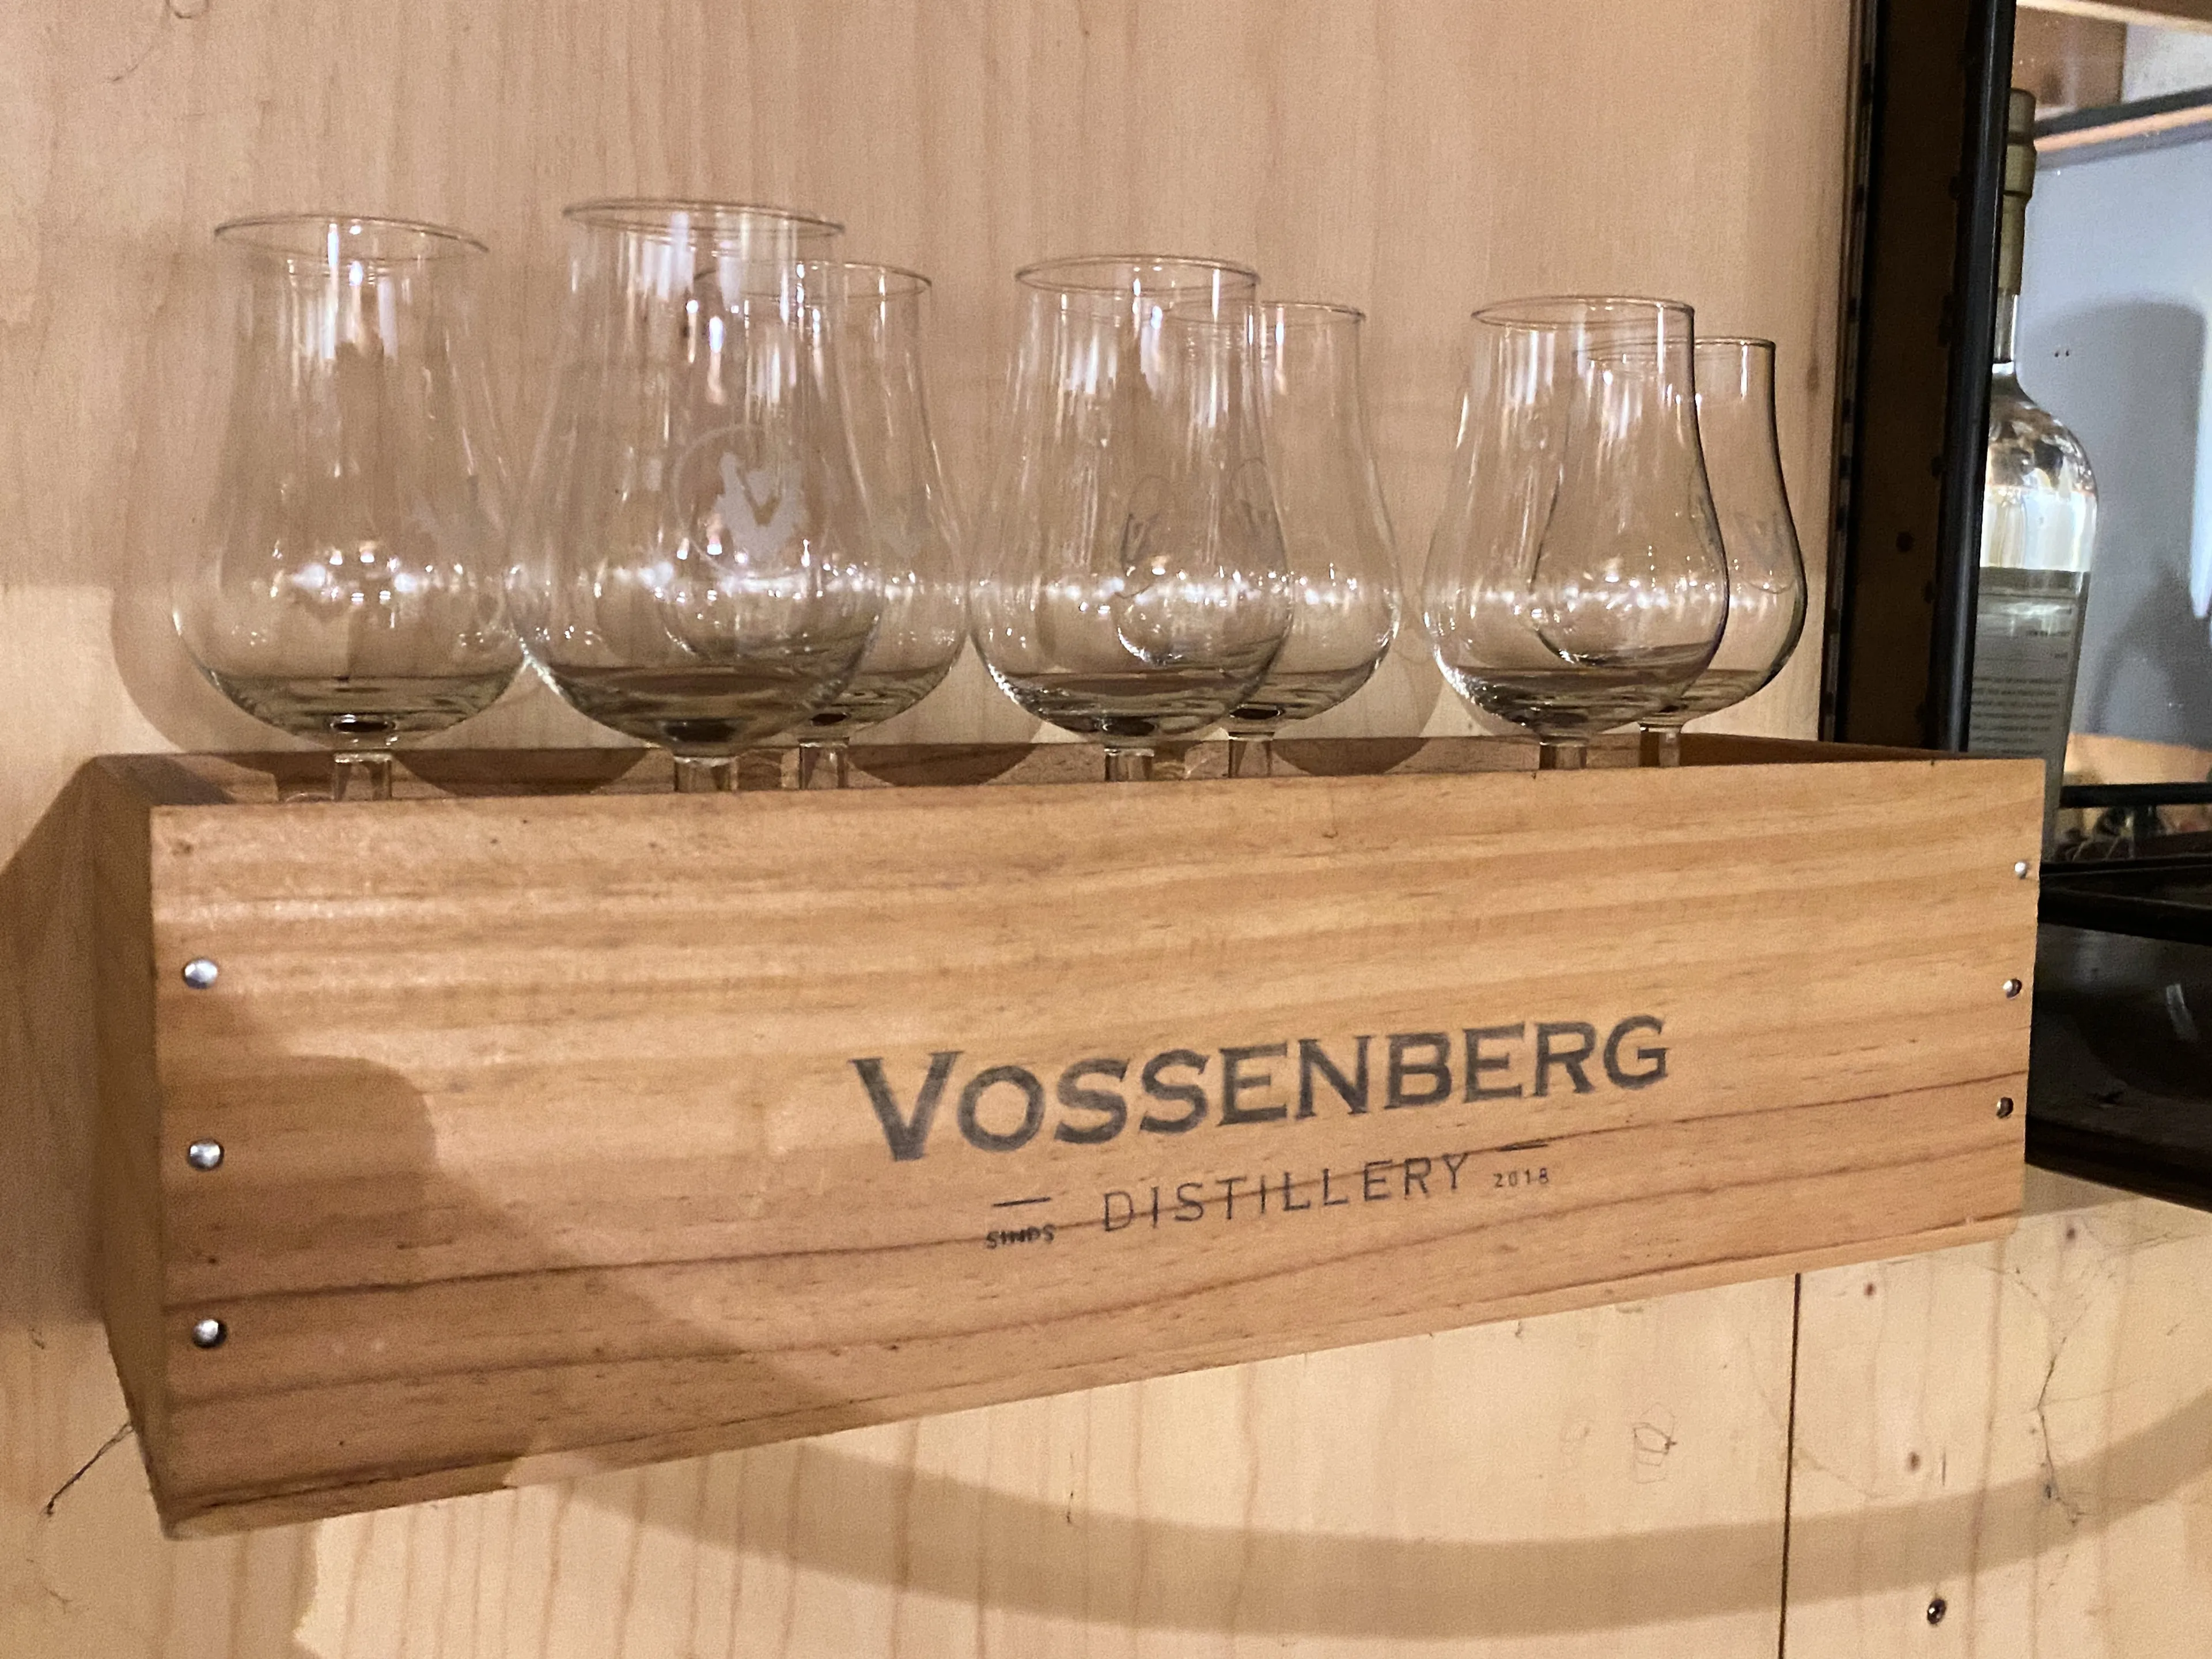 De Glencairn glazen in de Vossenberg Distillery